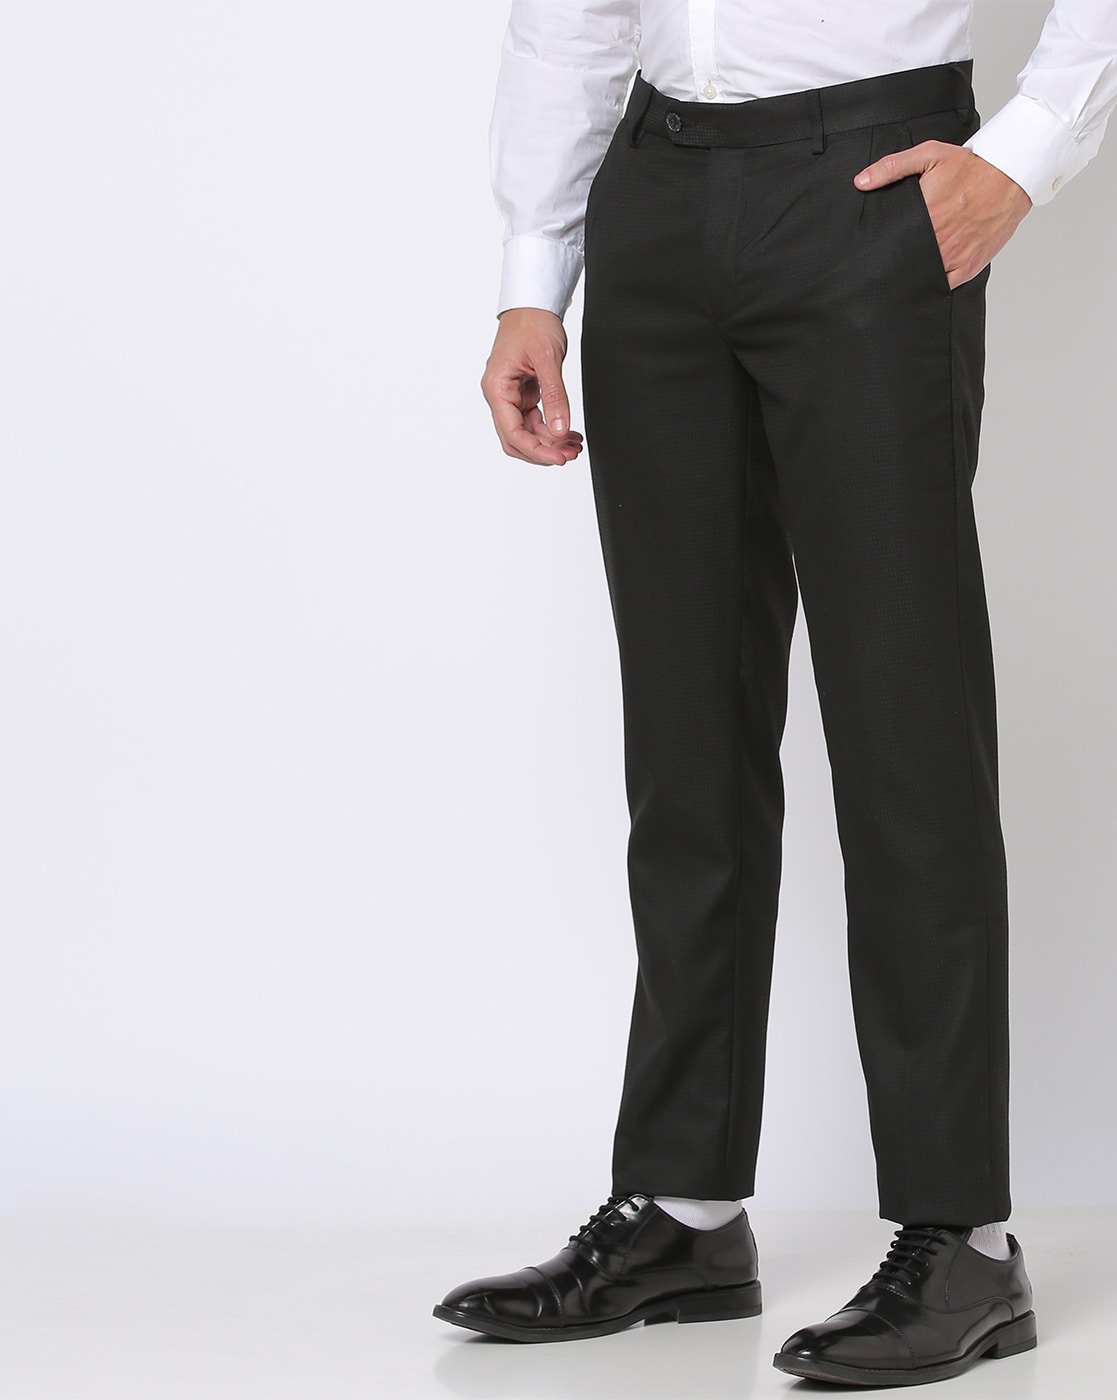 The Label | Men's Charcoal Pleated Suit Trousers | Suit Direct